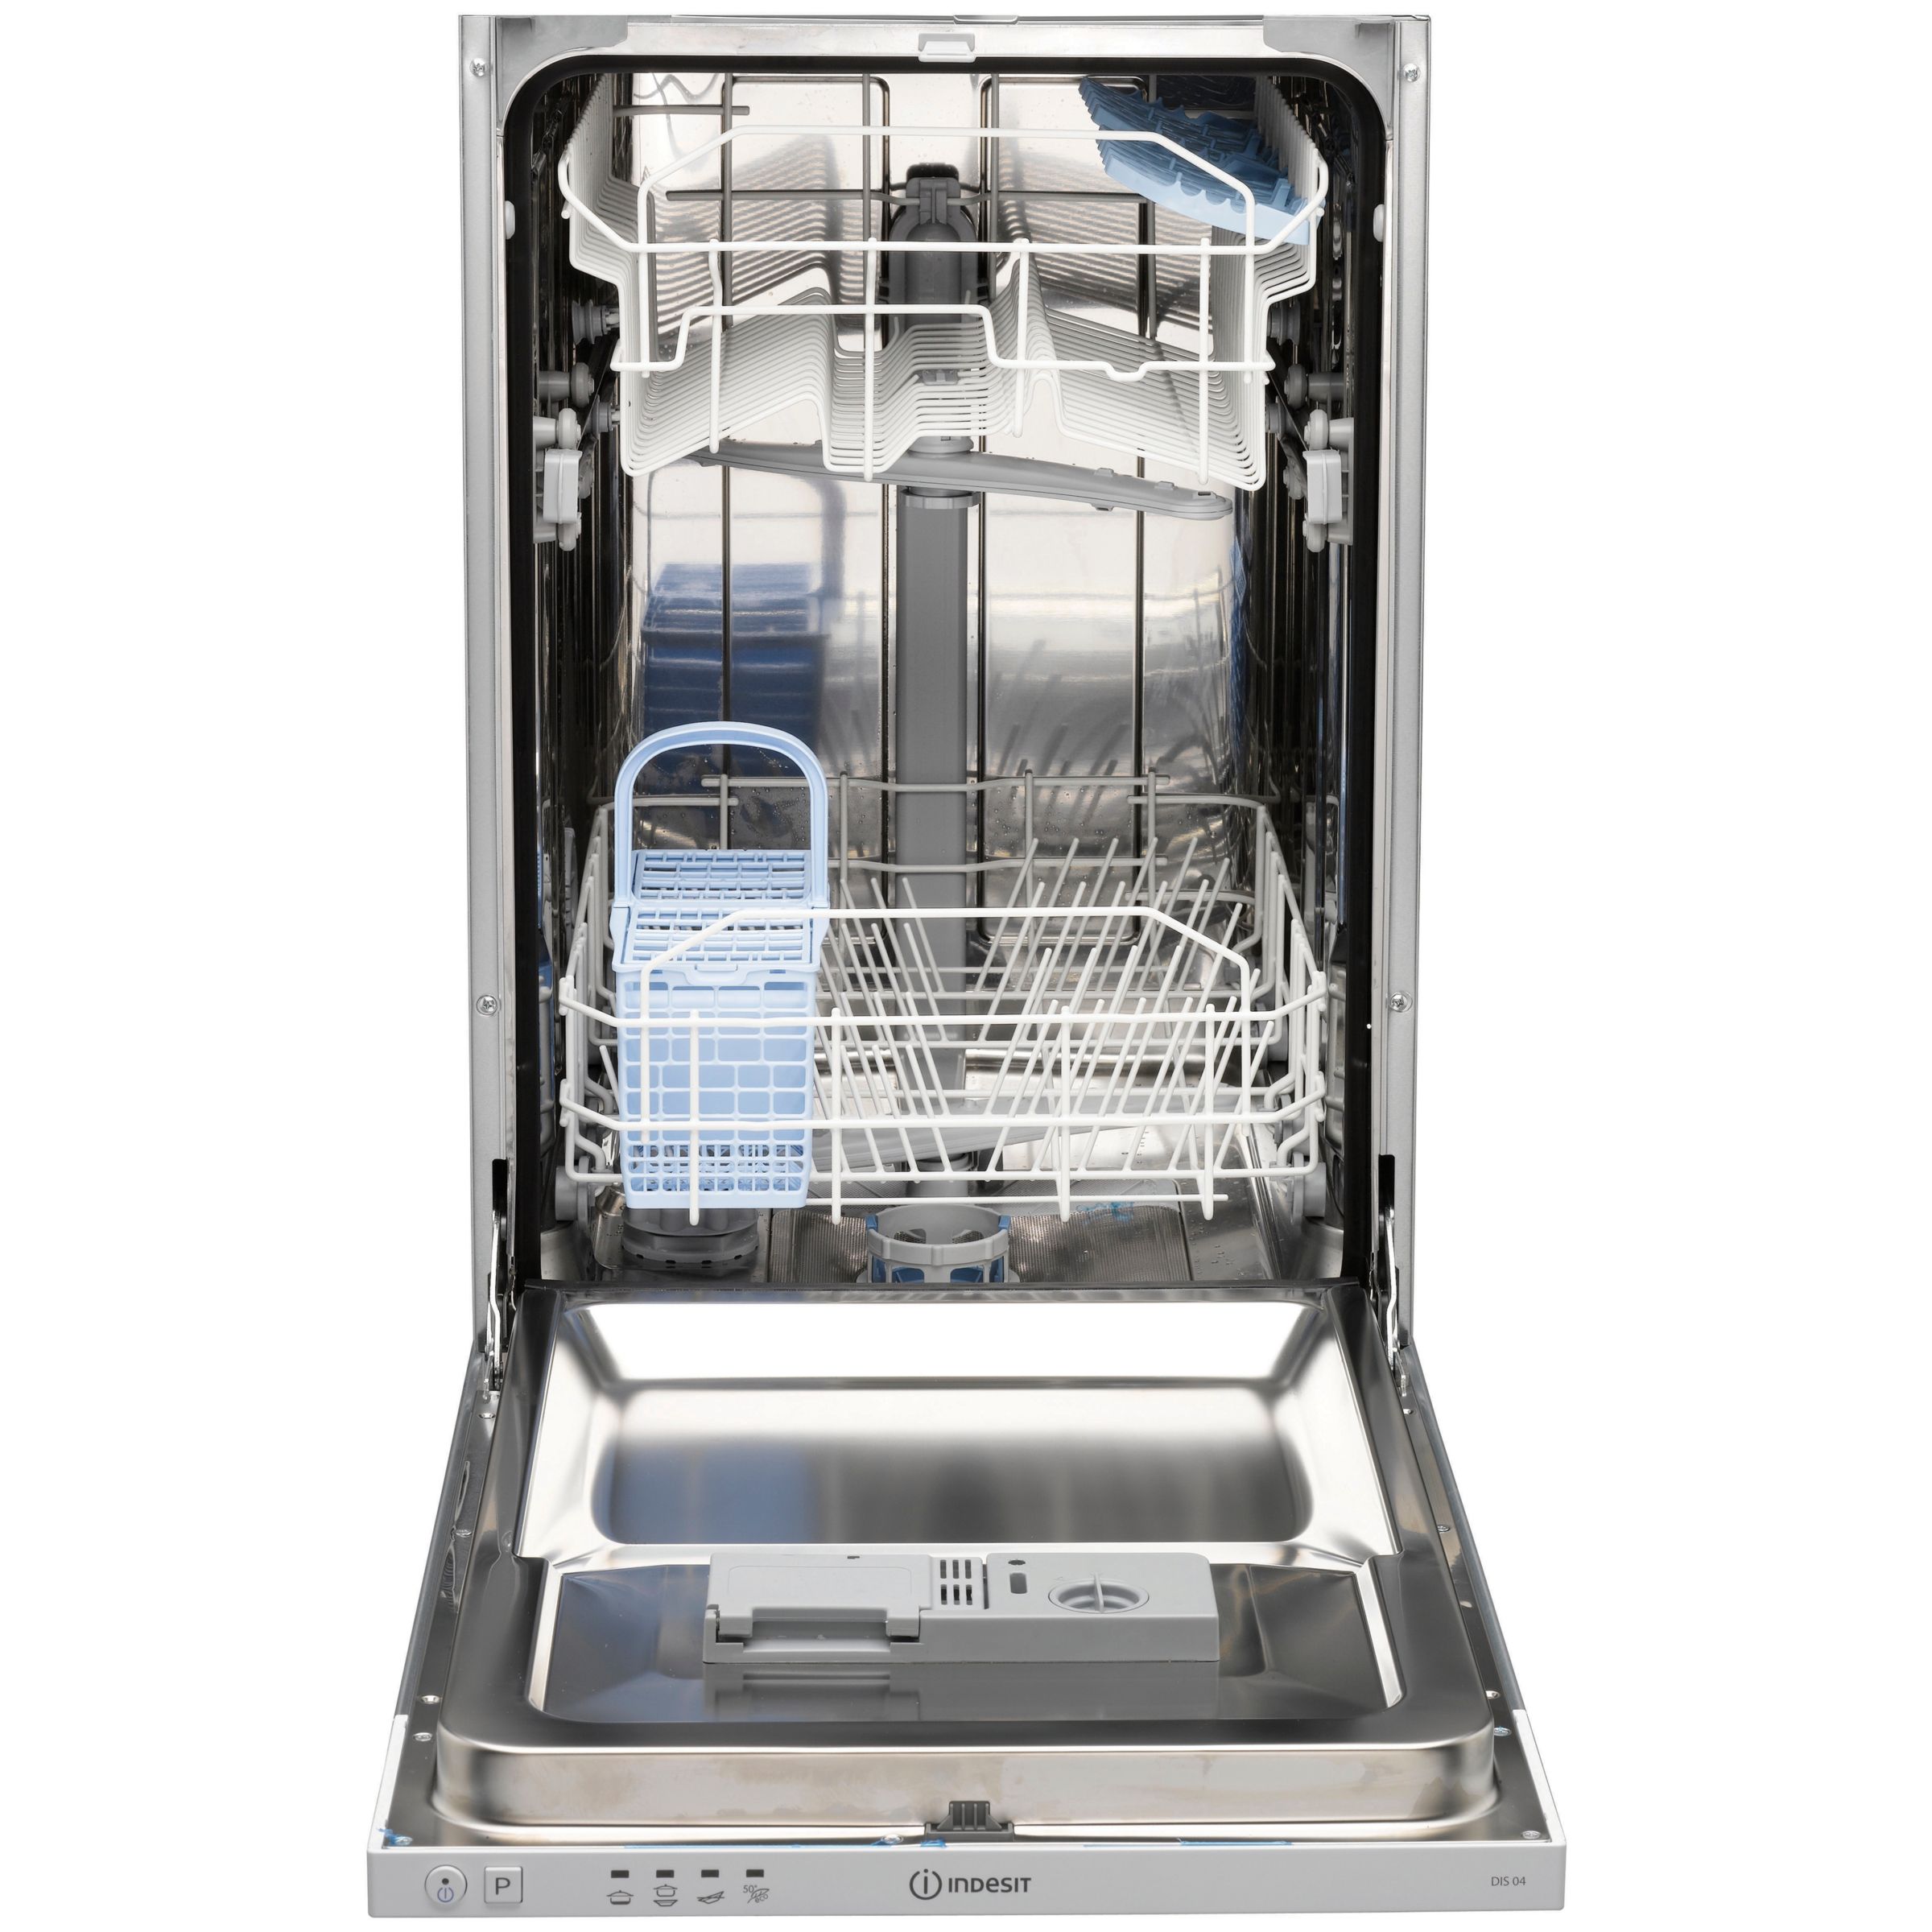 indesit slimline dishwasher